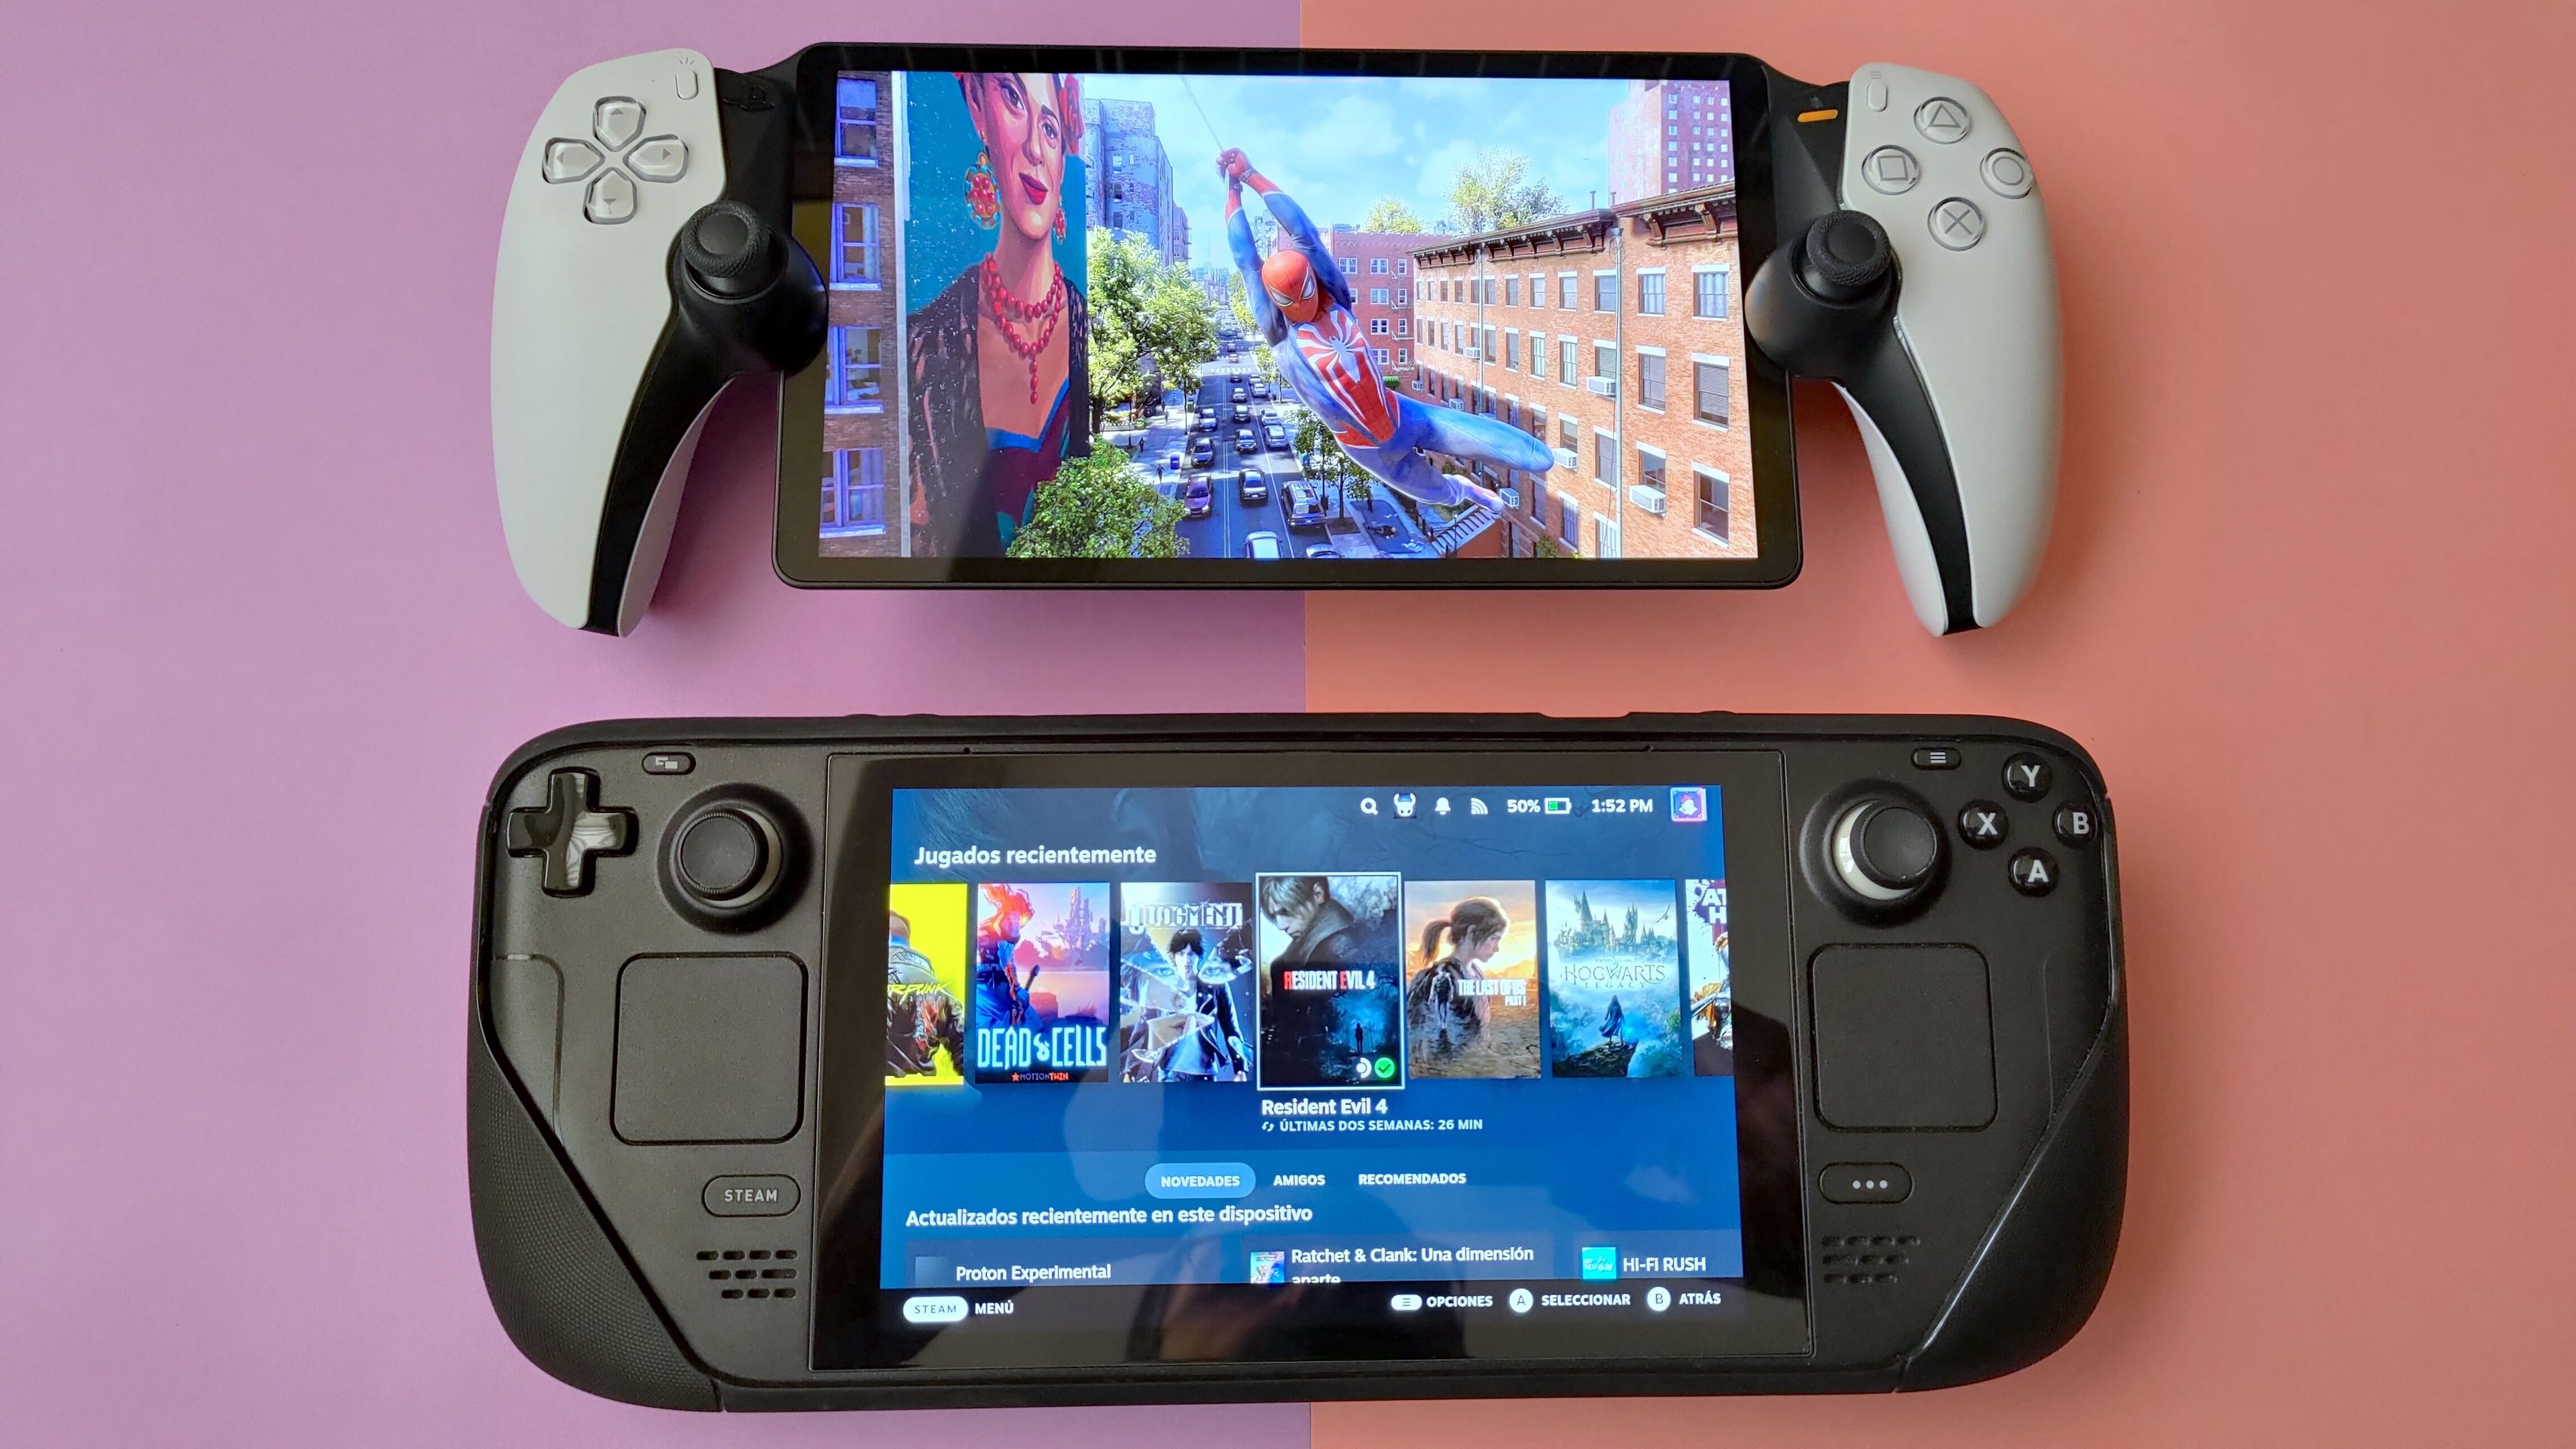 Análisis de PlayStation Portal, el reproductor portátil de PS5